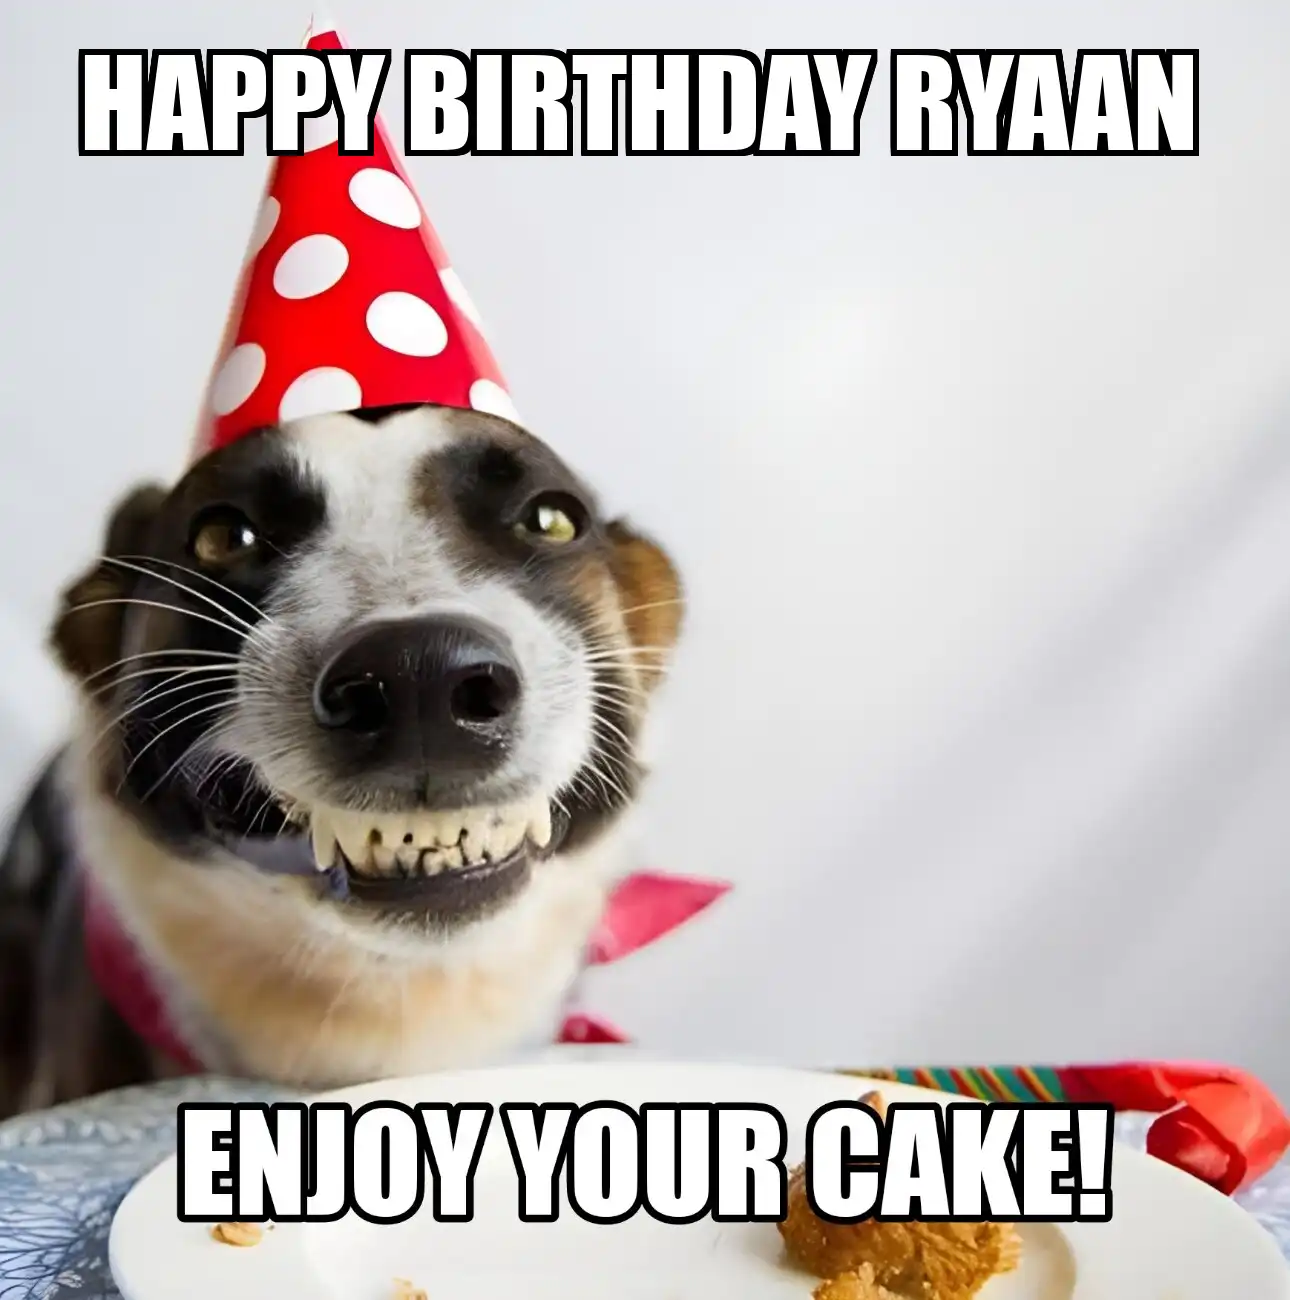 Happy Birthday Ryaan Enjoy Your Cake Dog Meme